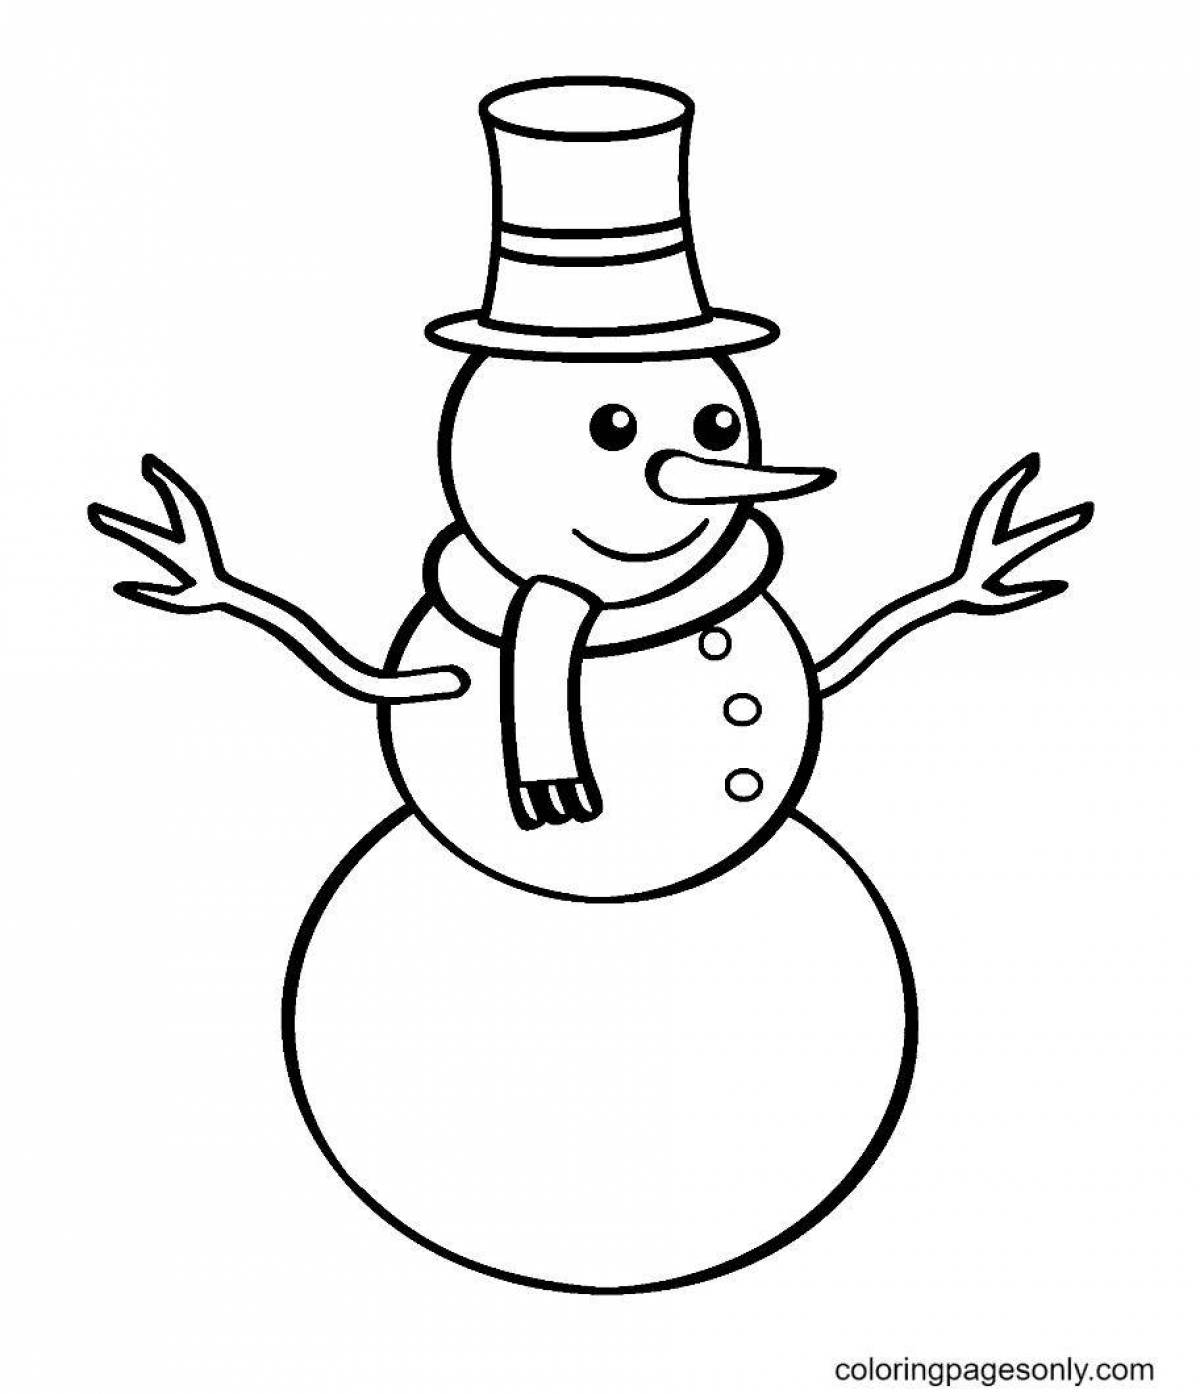 Coloring page happy snowman